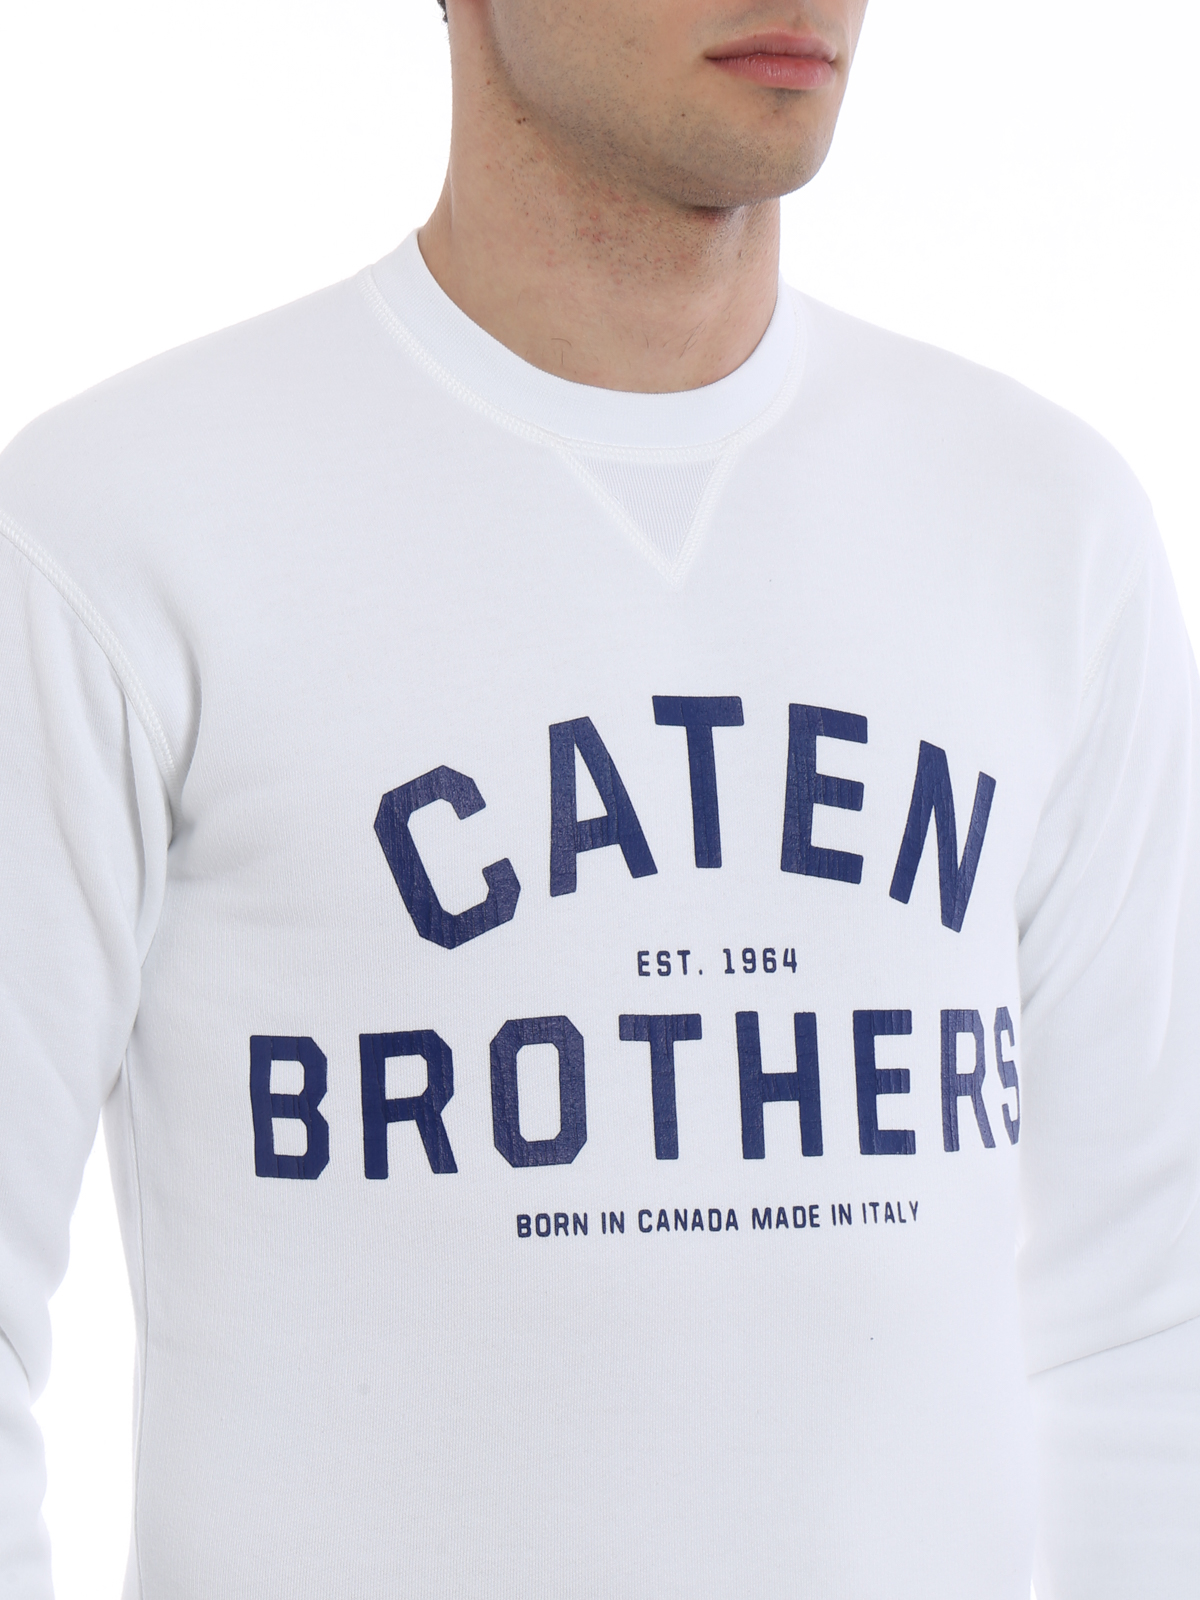 dsquared caten brothers sweatshirt